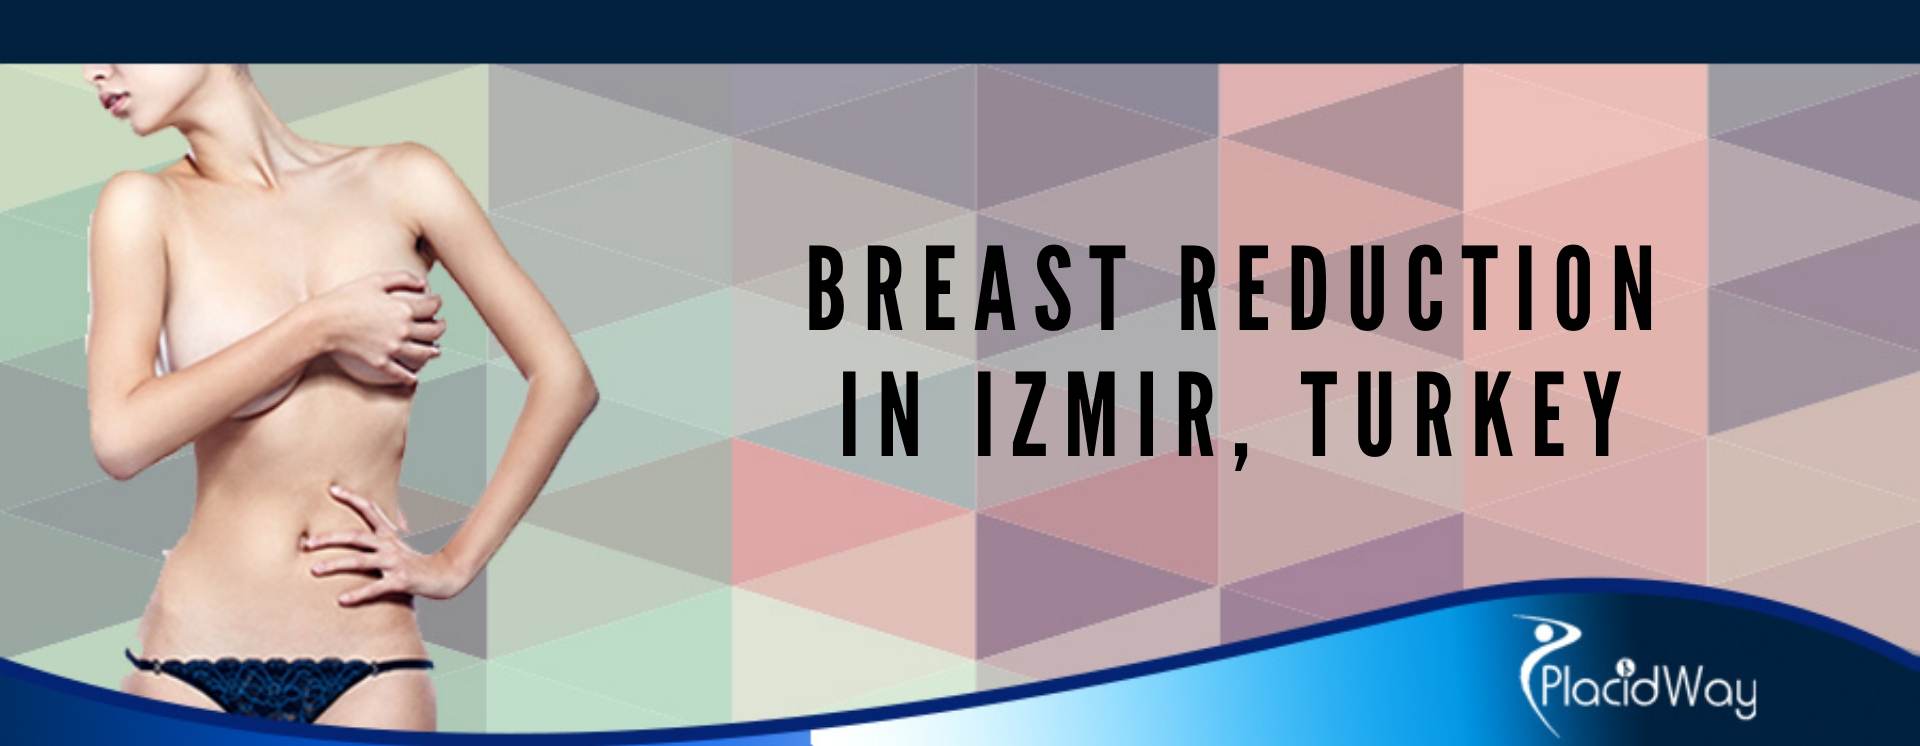 Breast Reduction in Izmir, Turkey